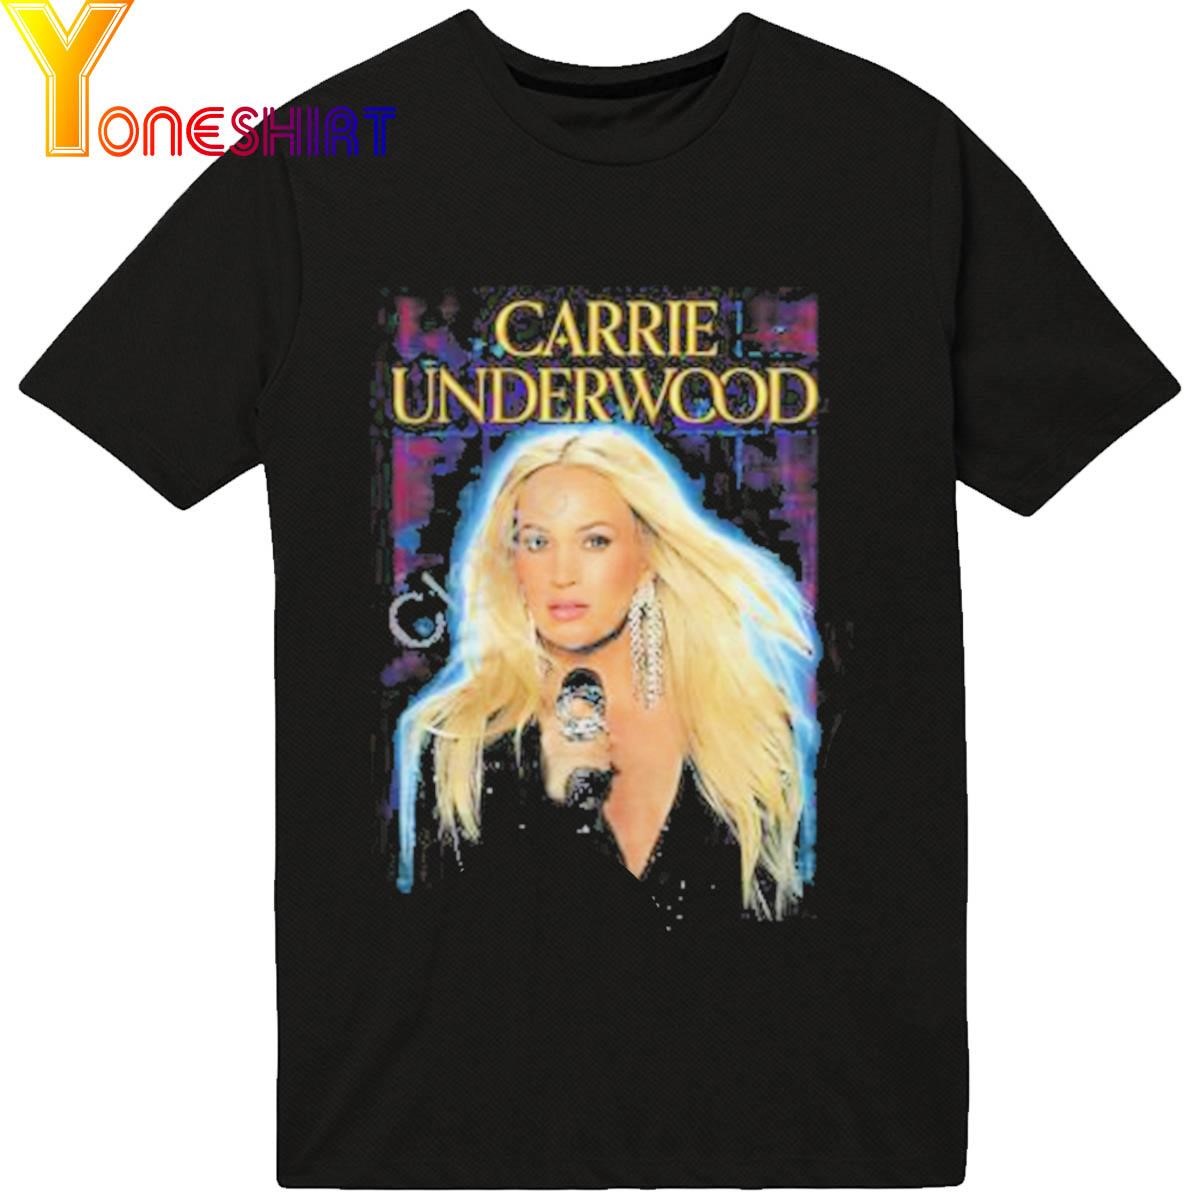 Carrie Underwood Black Rhinestone Mic Photo shirt